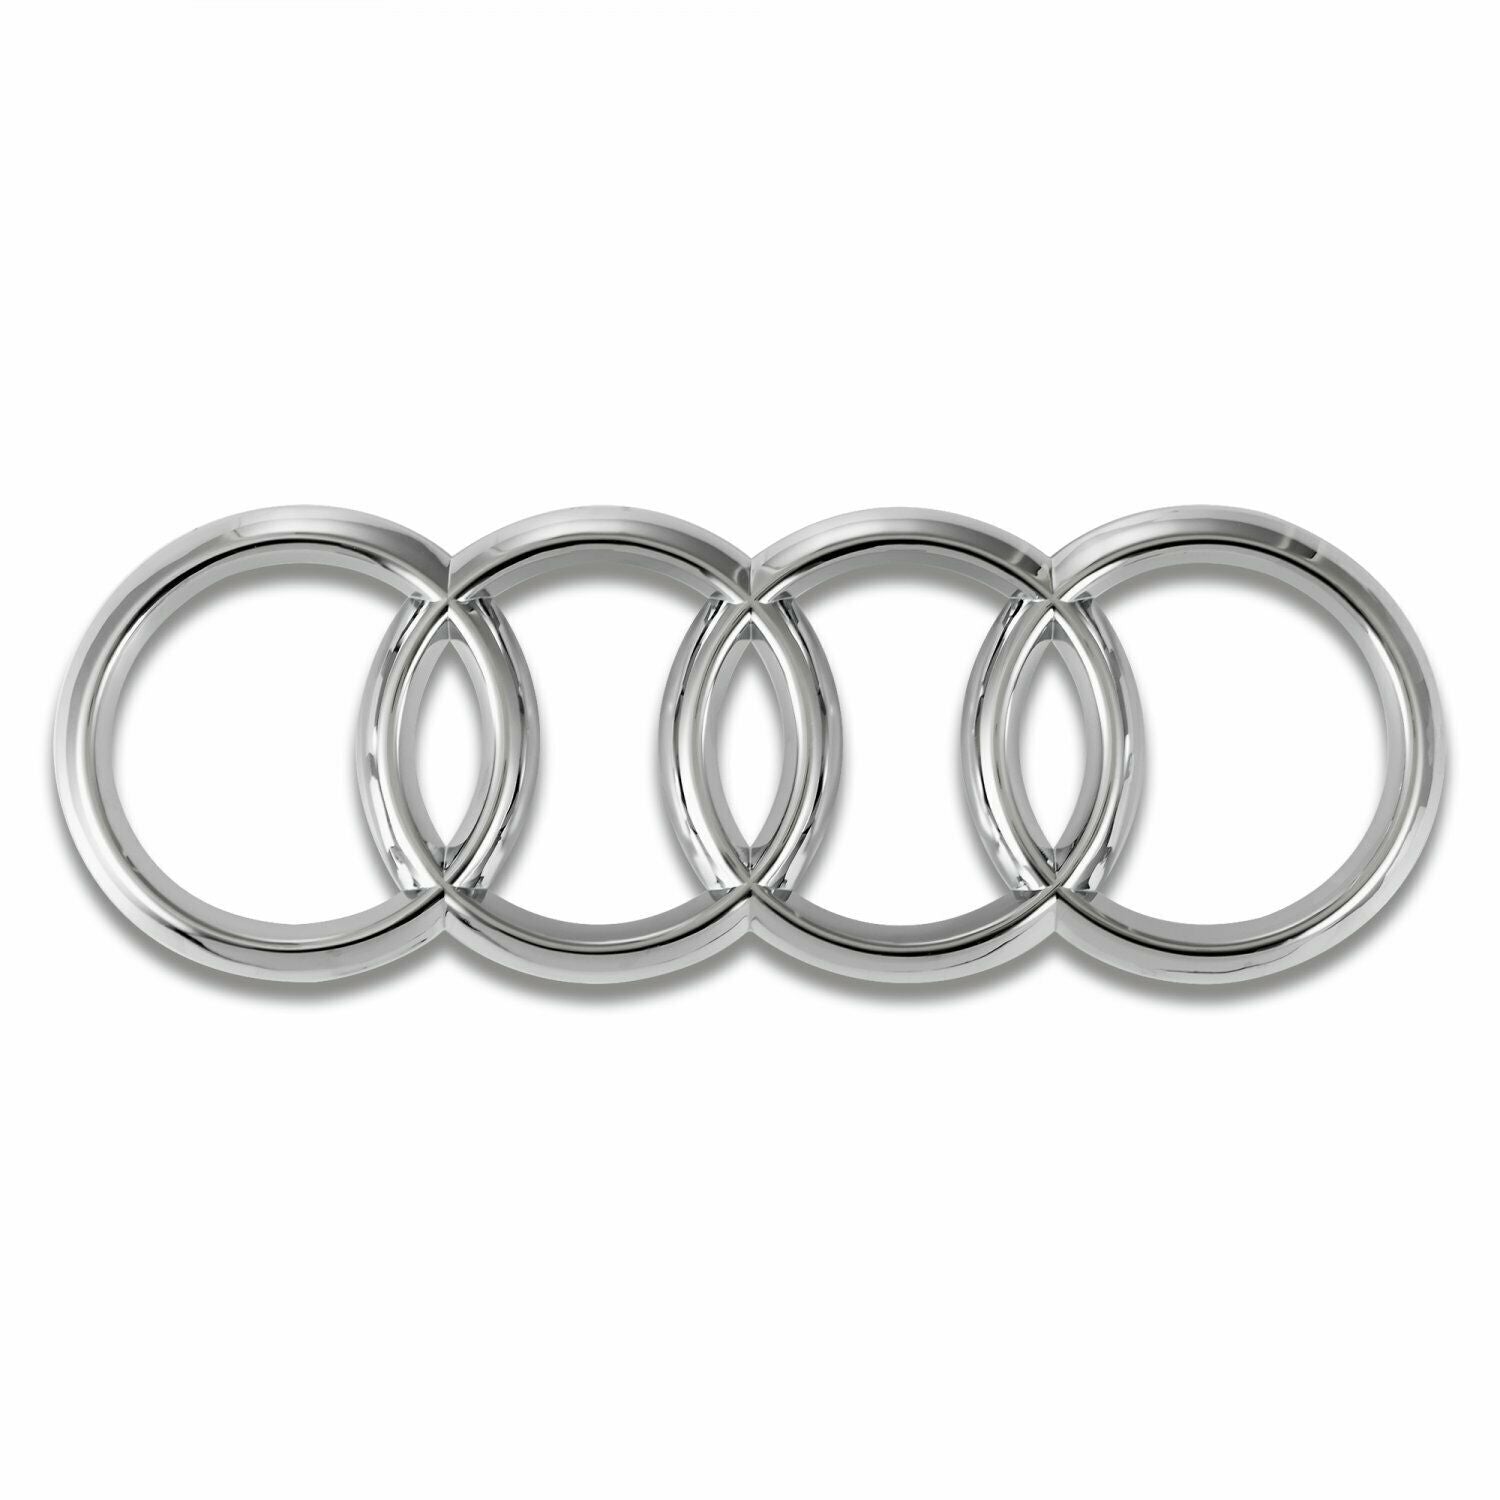 Premium Rear Rings Trunk Lid Emblems for Audi Models